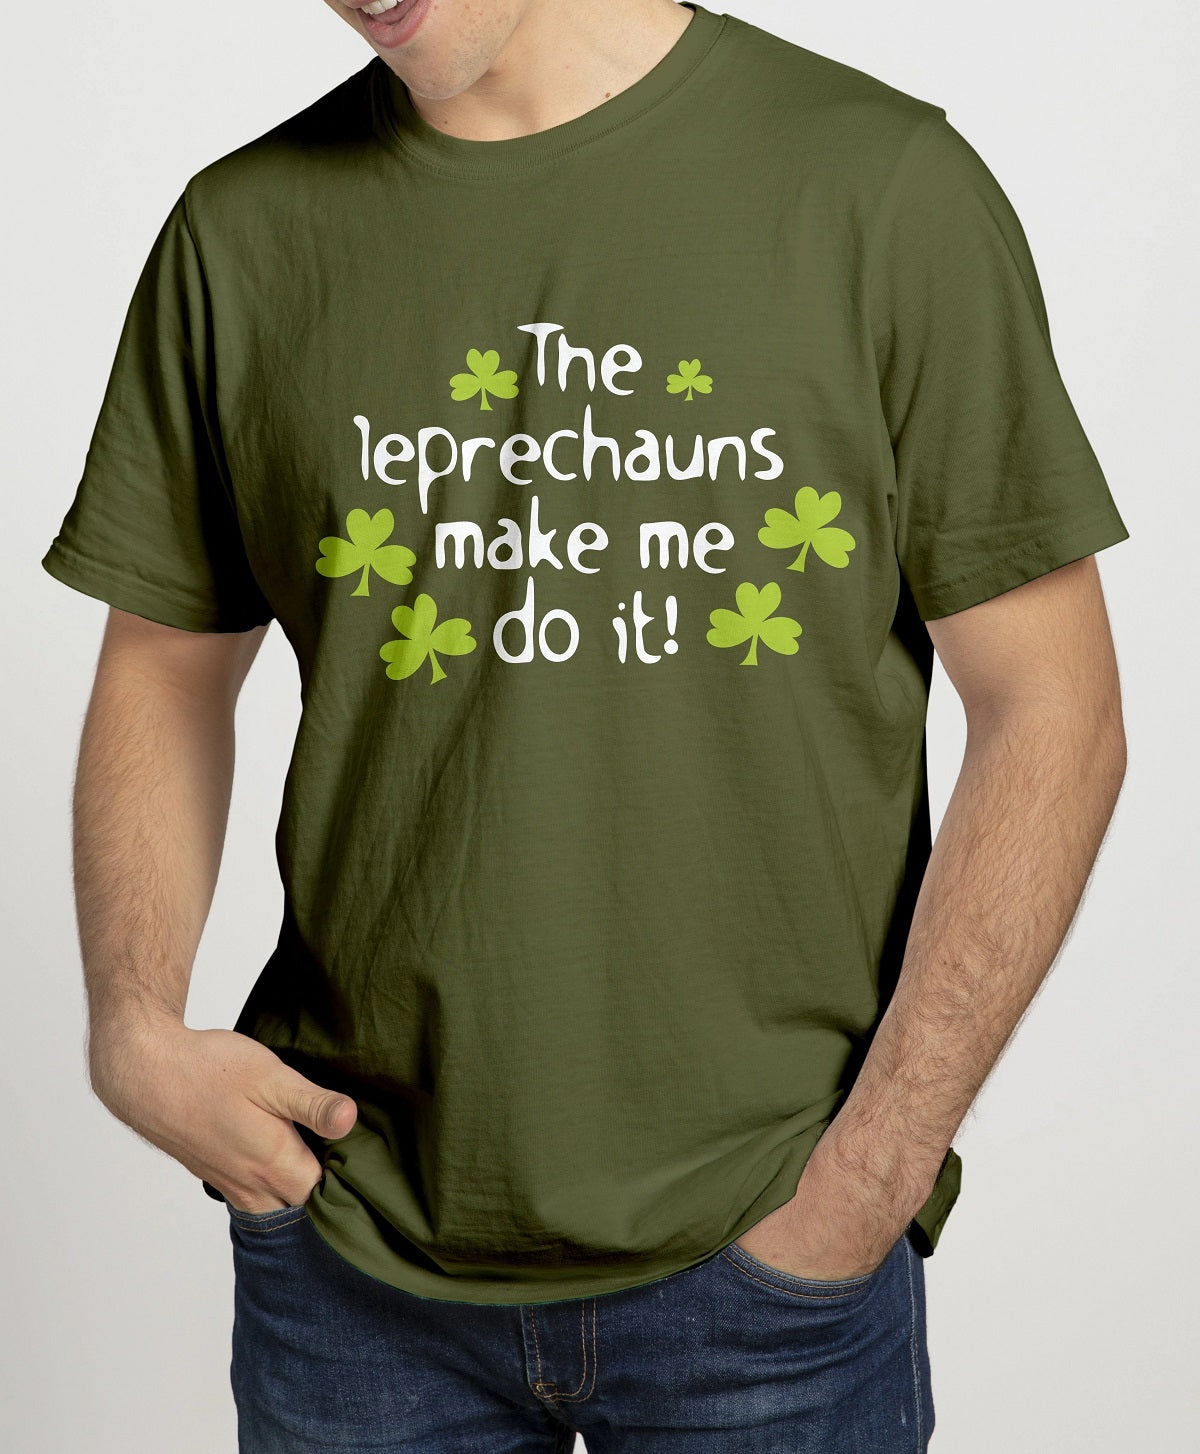 Cara Craft Leprechauns Make Me Do It T-Shirt Olive